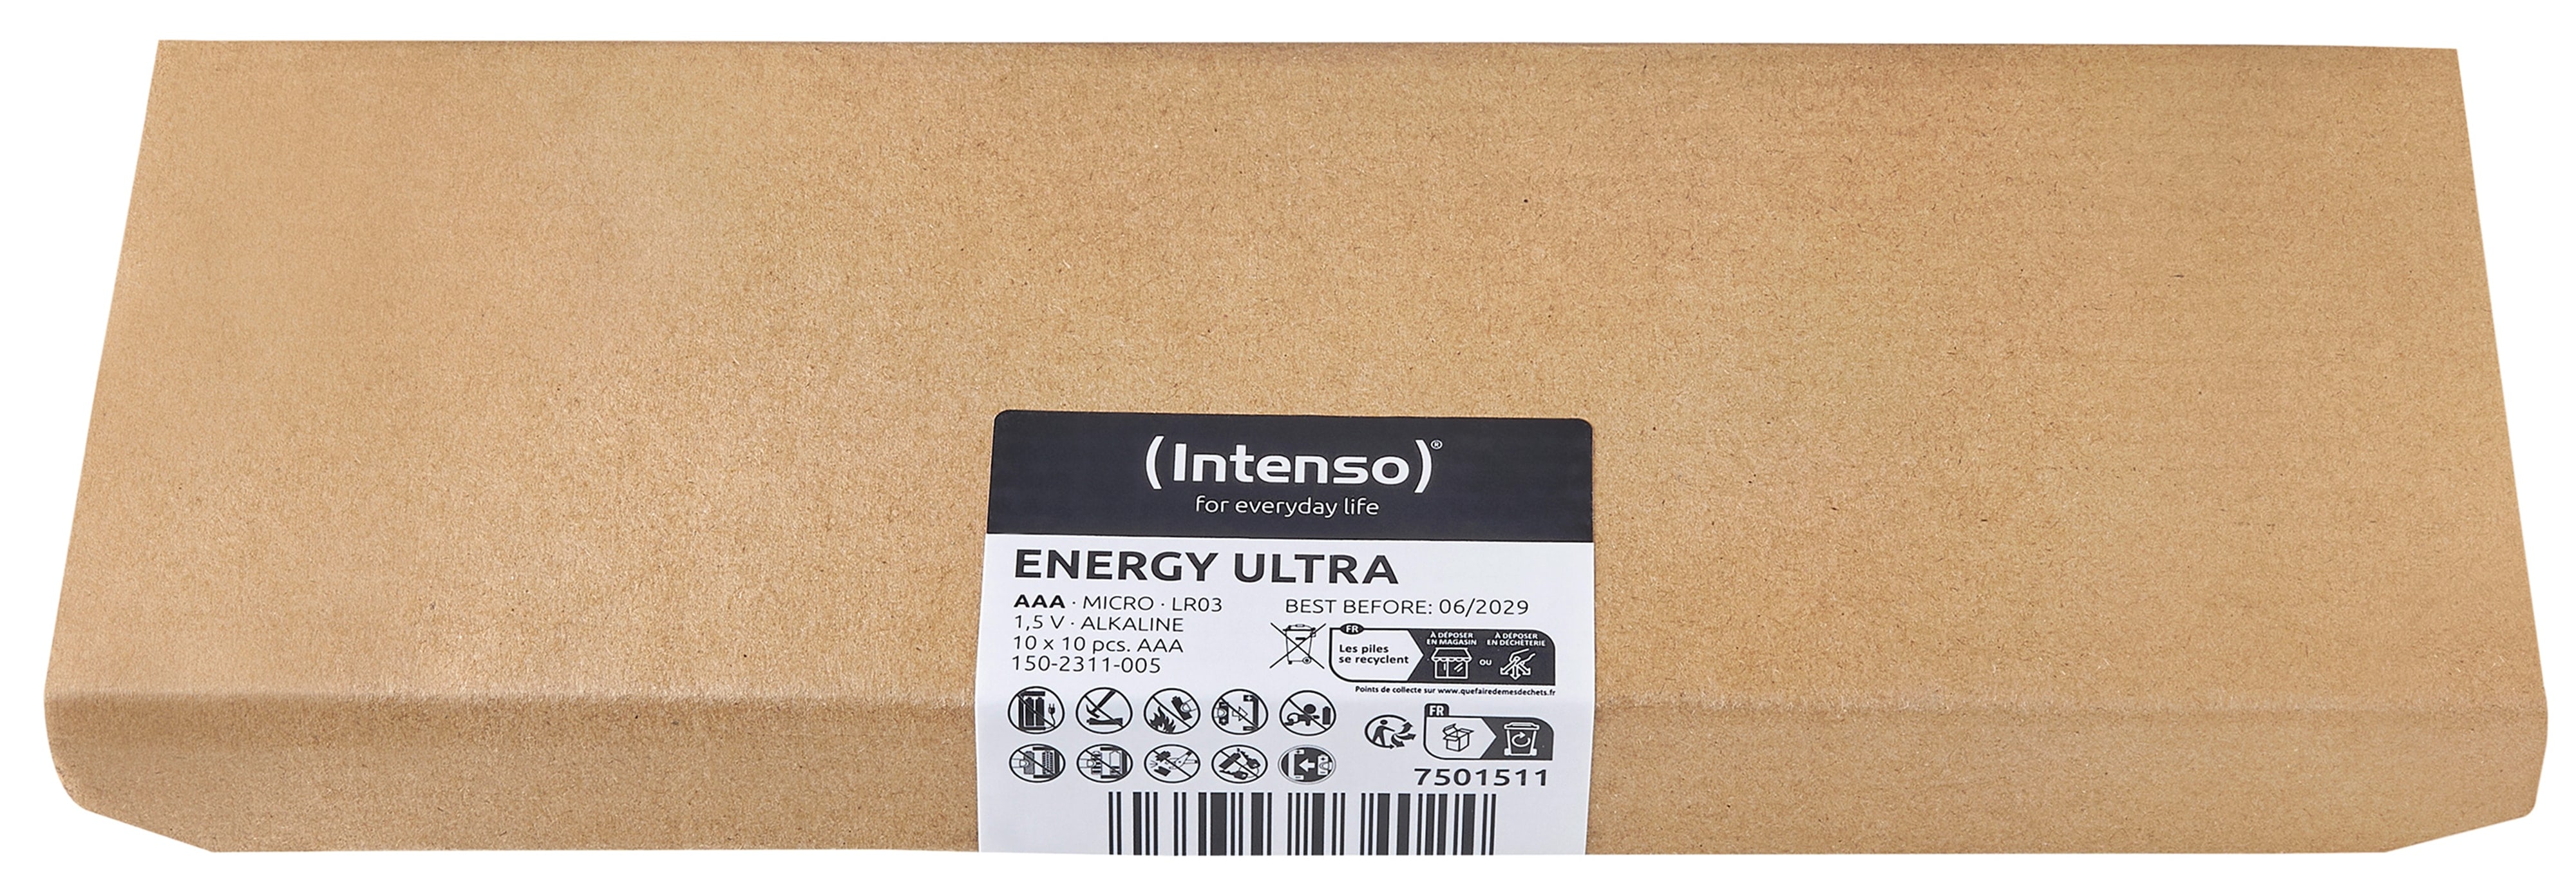 INTENSO Micro-Batterie Energy Ultra, AAA LR03, 100 Stück